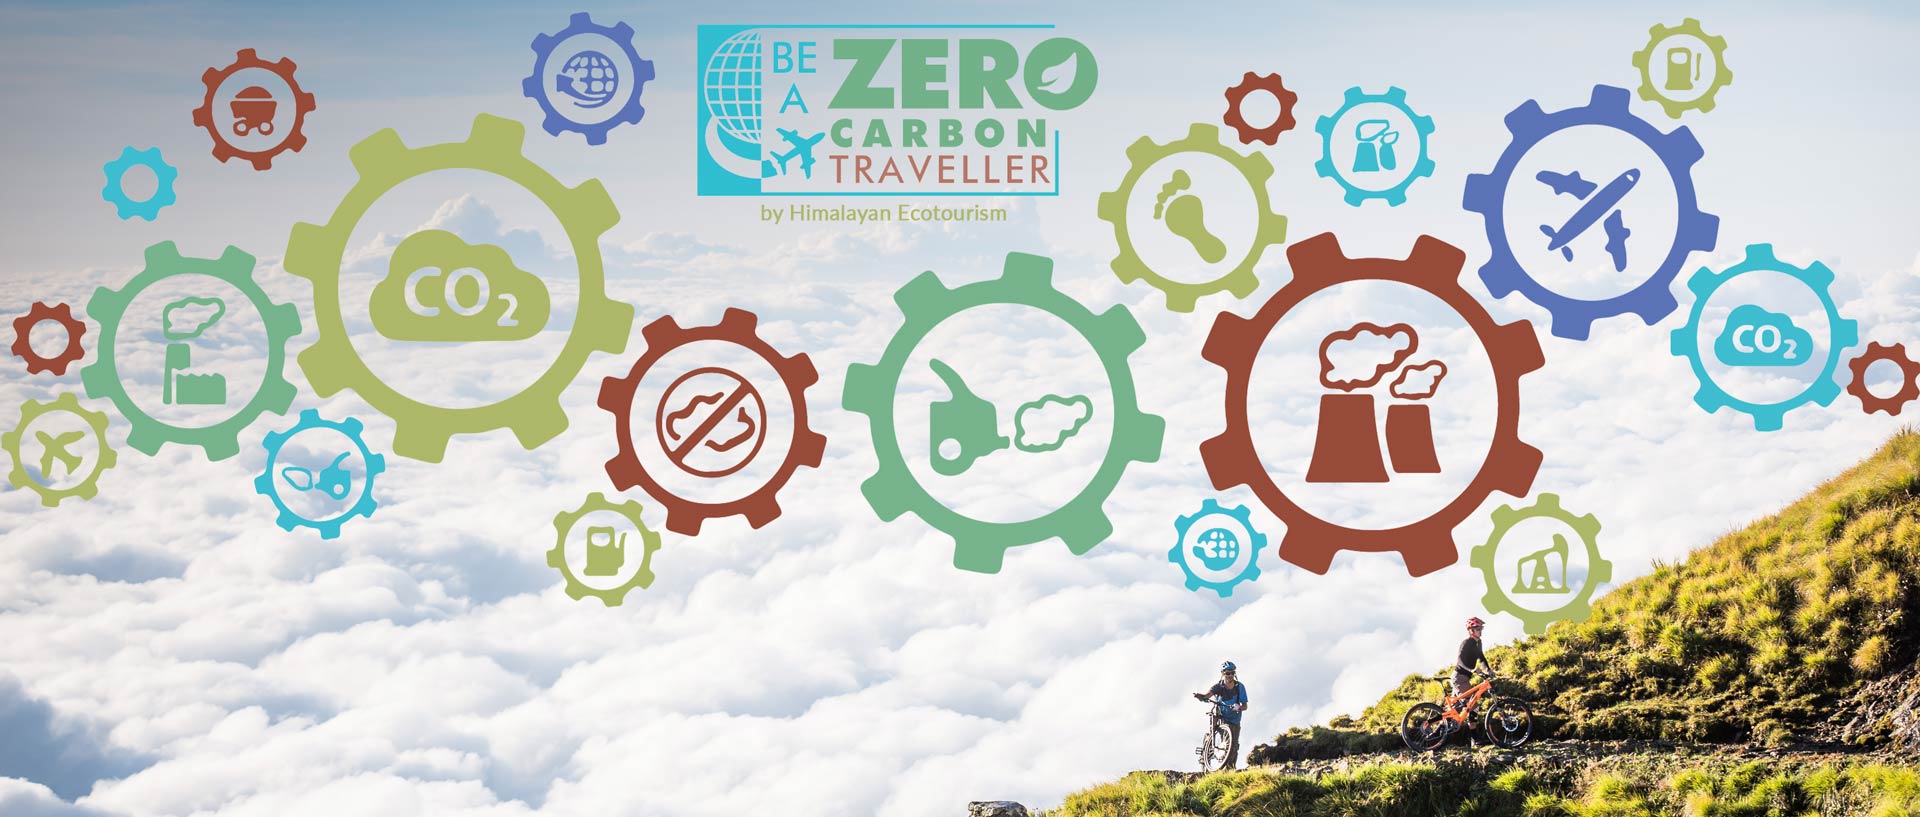 Zero carbon traveller initiative by Himalayan Ecotourism